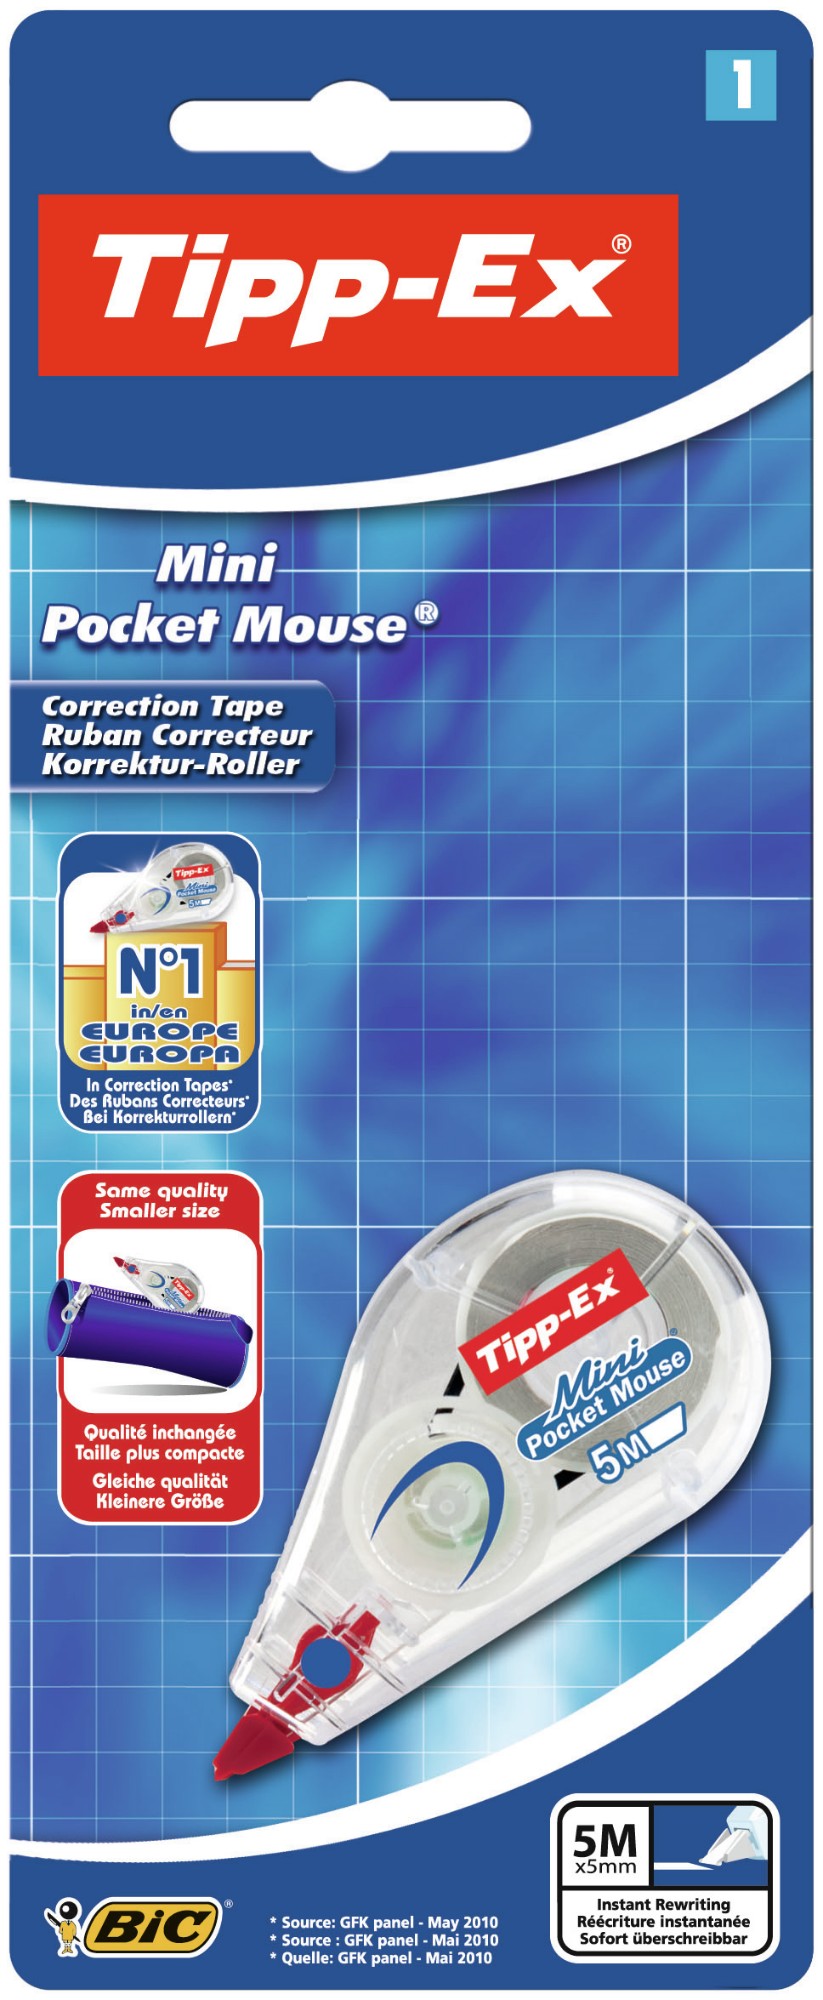 Comprar online Corrector en cinta Tipp-ex Mini Pocket Mouse (812878).  DISOFIC